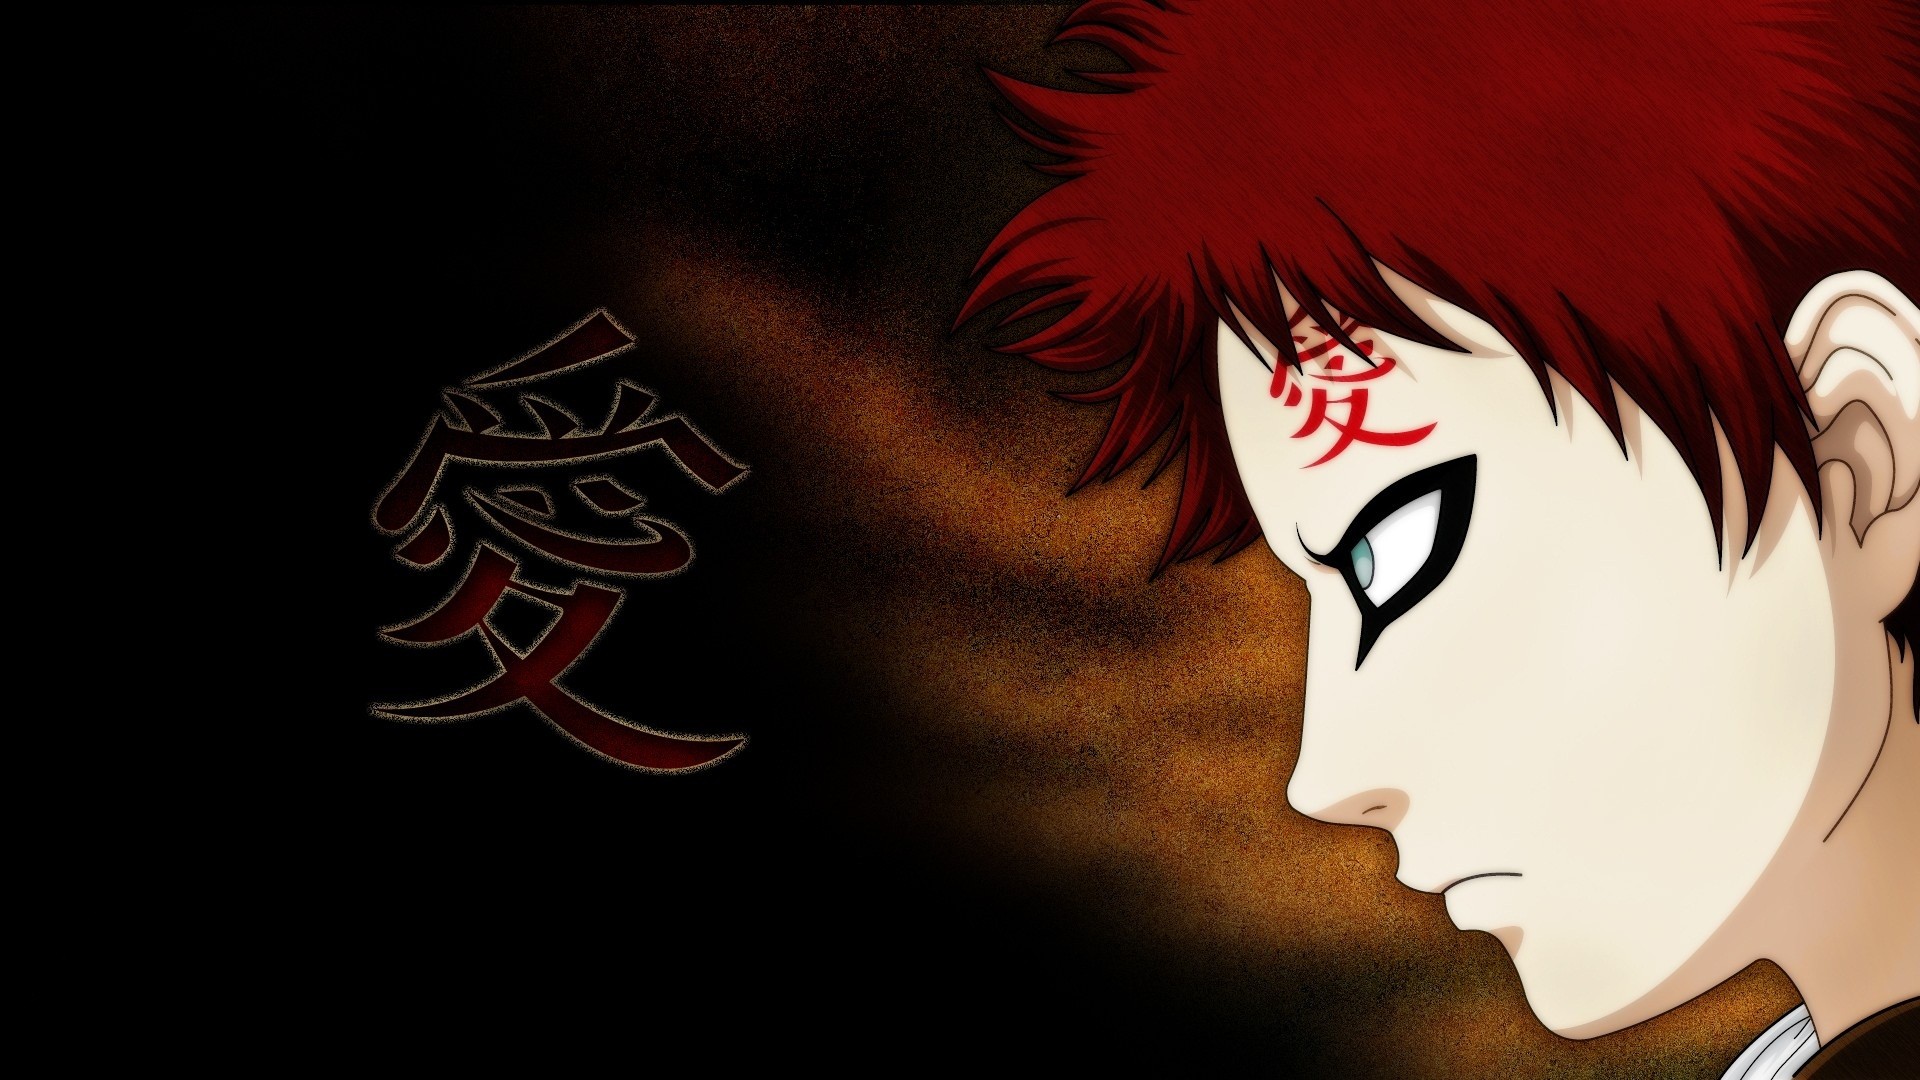 Anime 1920x1080 Naruto Shippuden Gaara tattoo redhead kanji anime face anime boys blue eyes profile